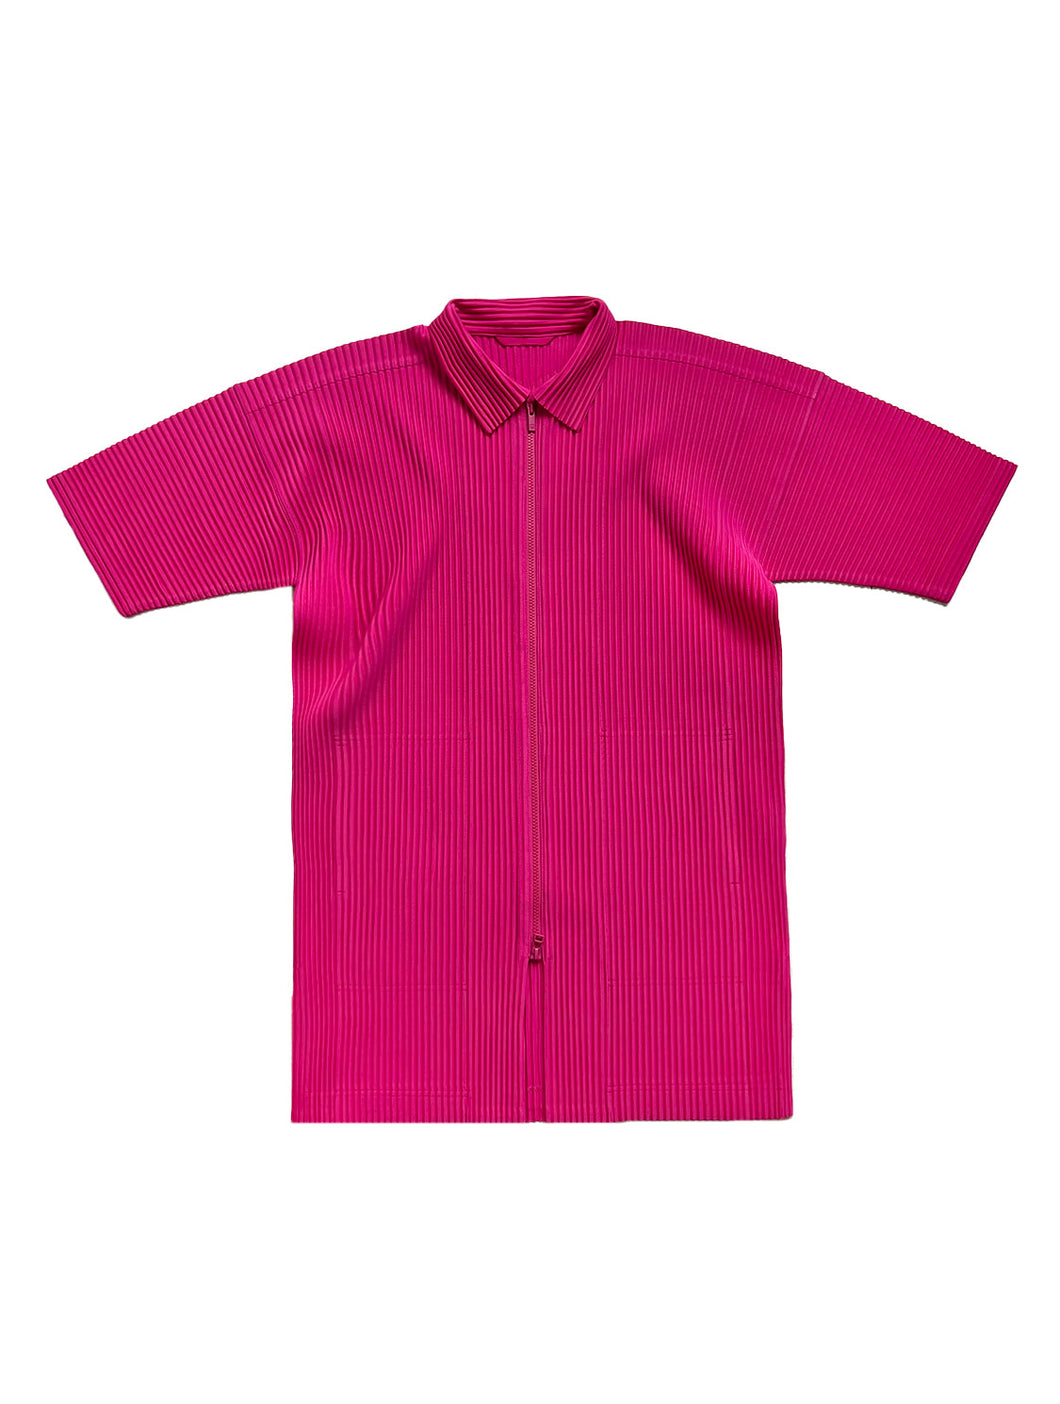 Issey Miyake Pleats Please Pink Zip-Up Shirt